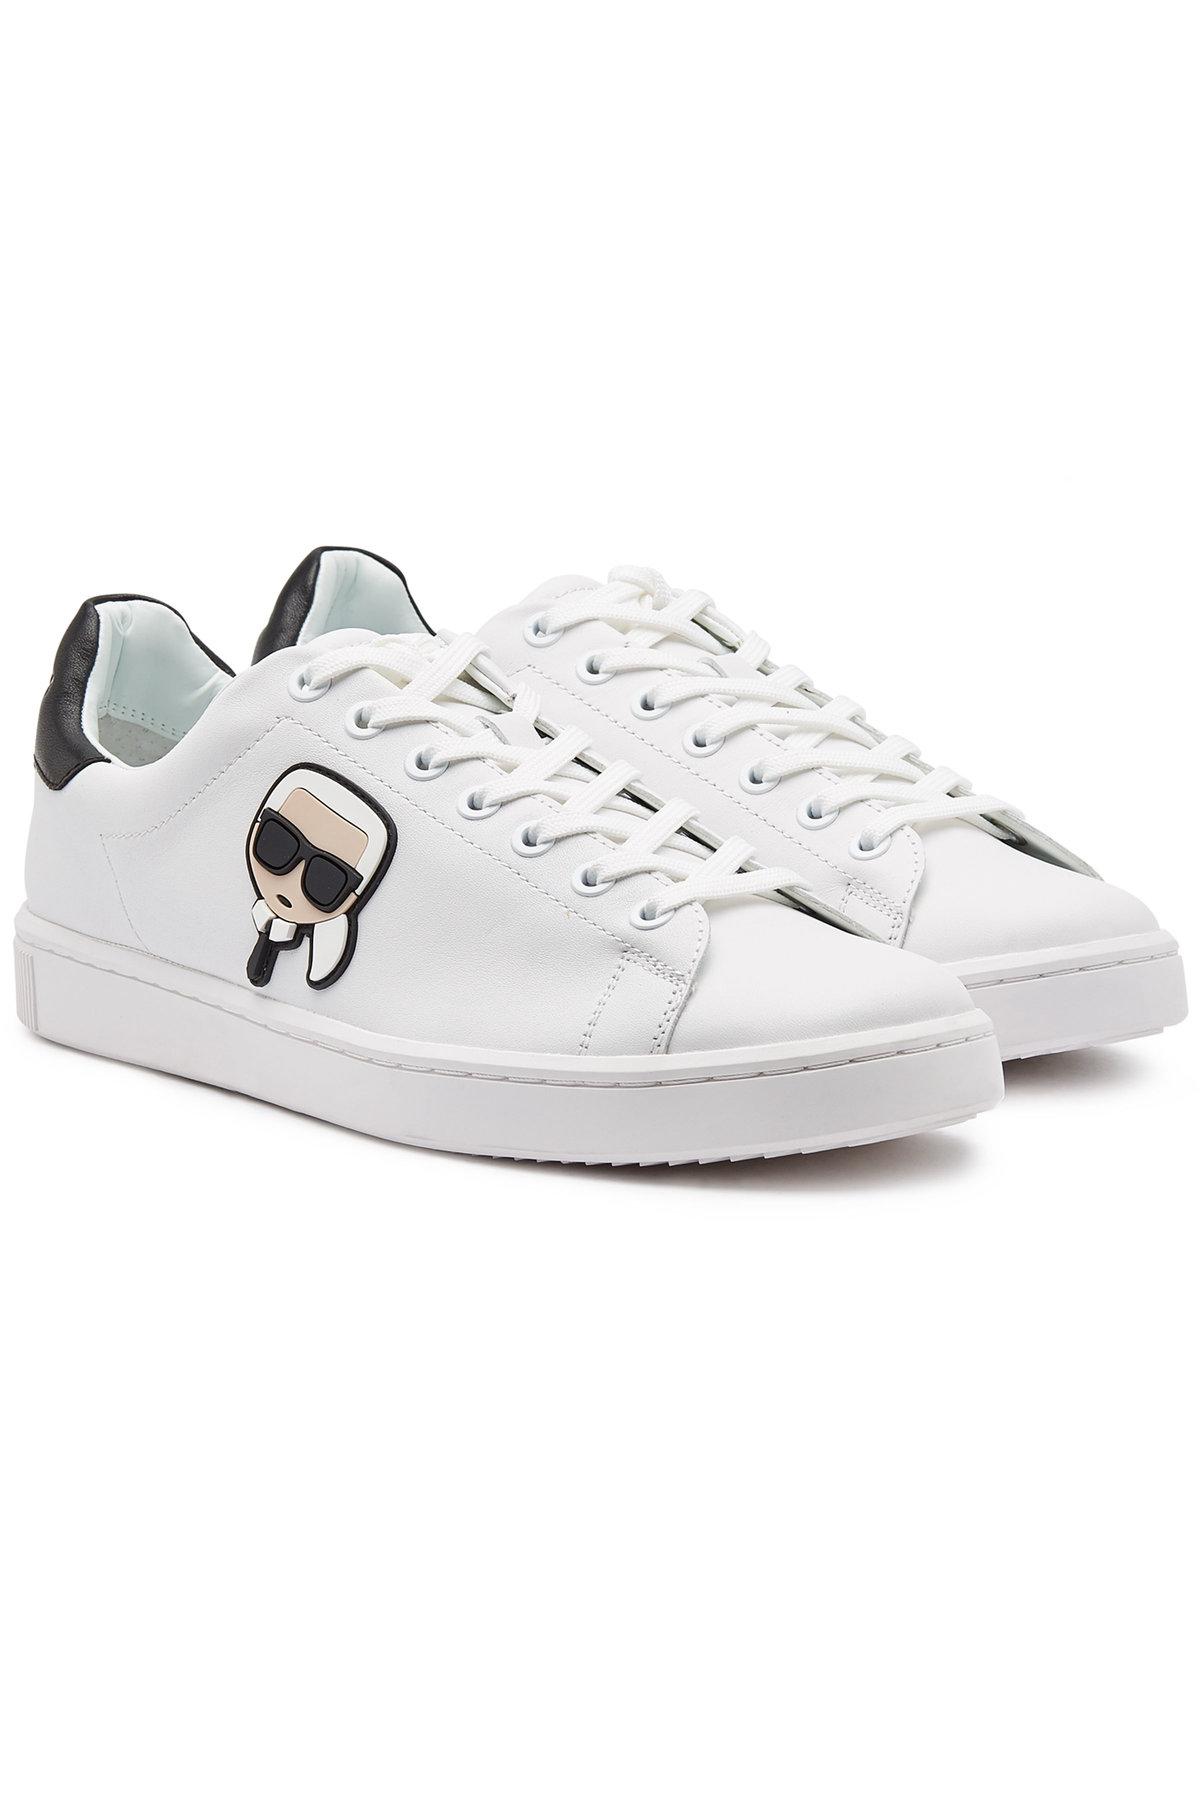 Lyst - Karl Lagerfeld Karl Ikonik Leather Sneakers in White for Men